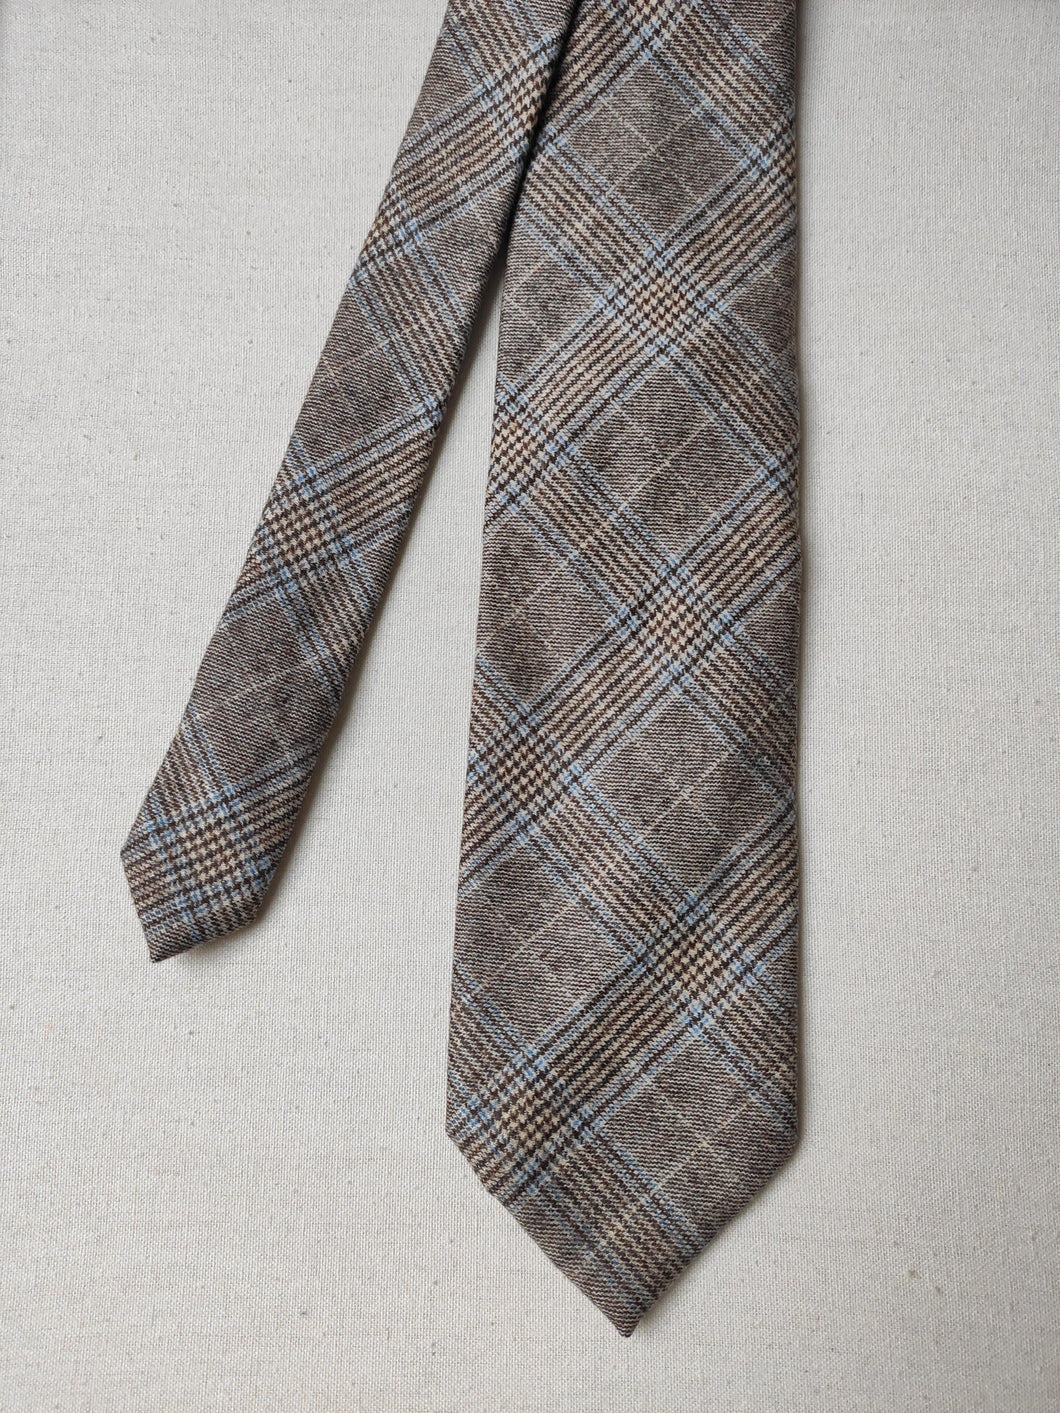 Altea Milano cravate en laine et cachemire Prince de Galles Made in Italy